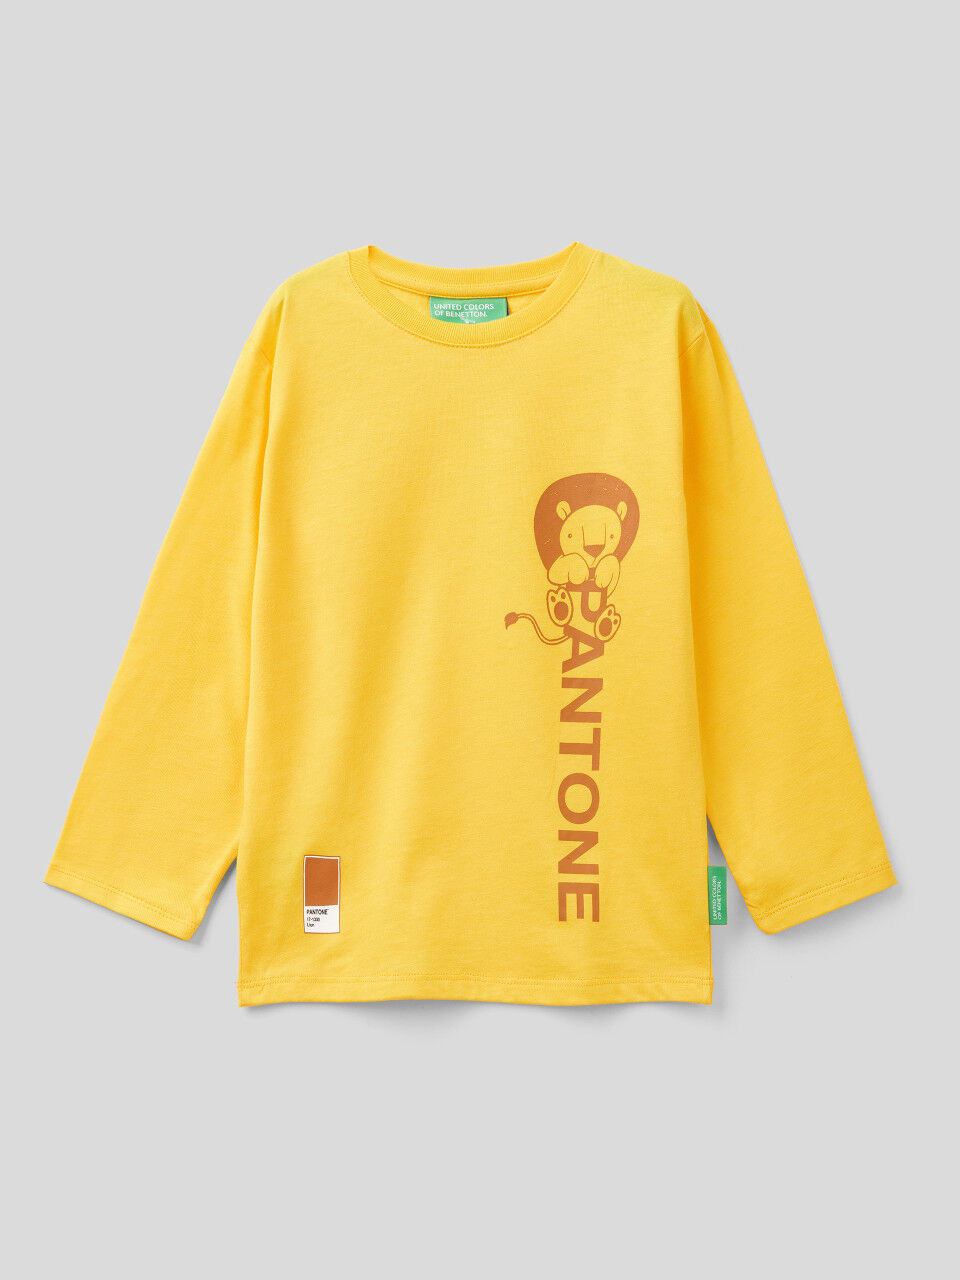 BenettonxPantone™ yellow t-shirt